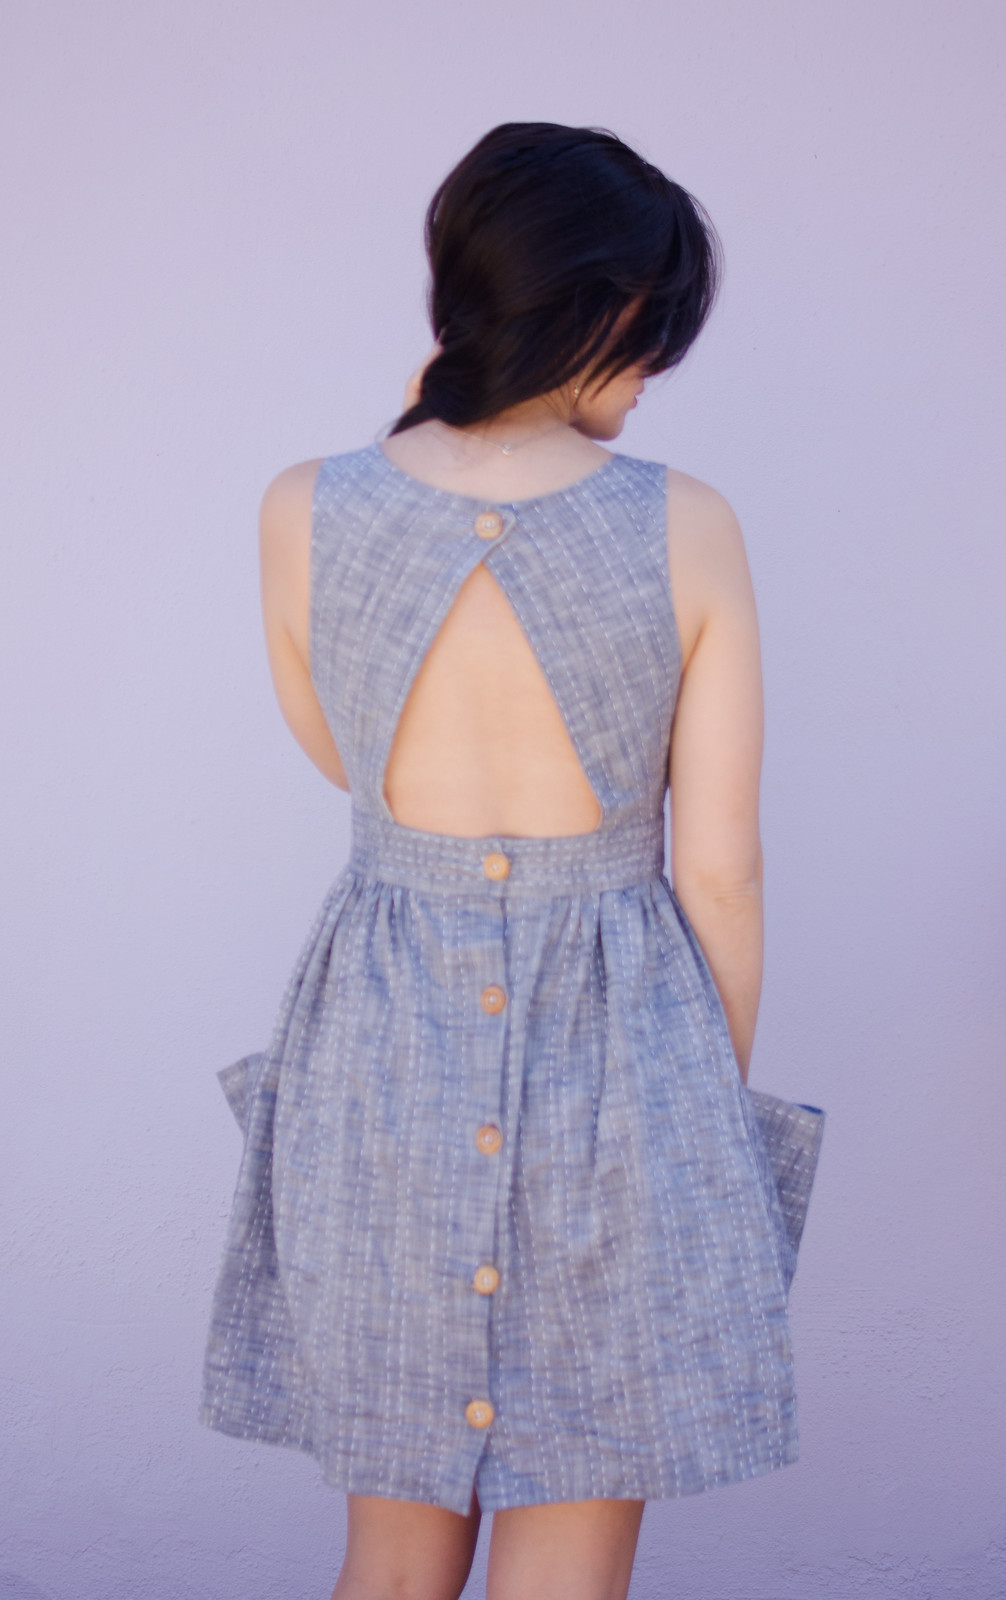 Sashiko Thread - Stonemountain & Daughter Fabrics